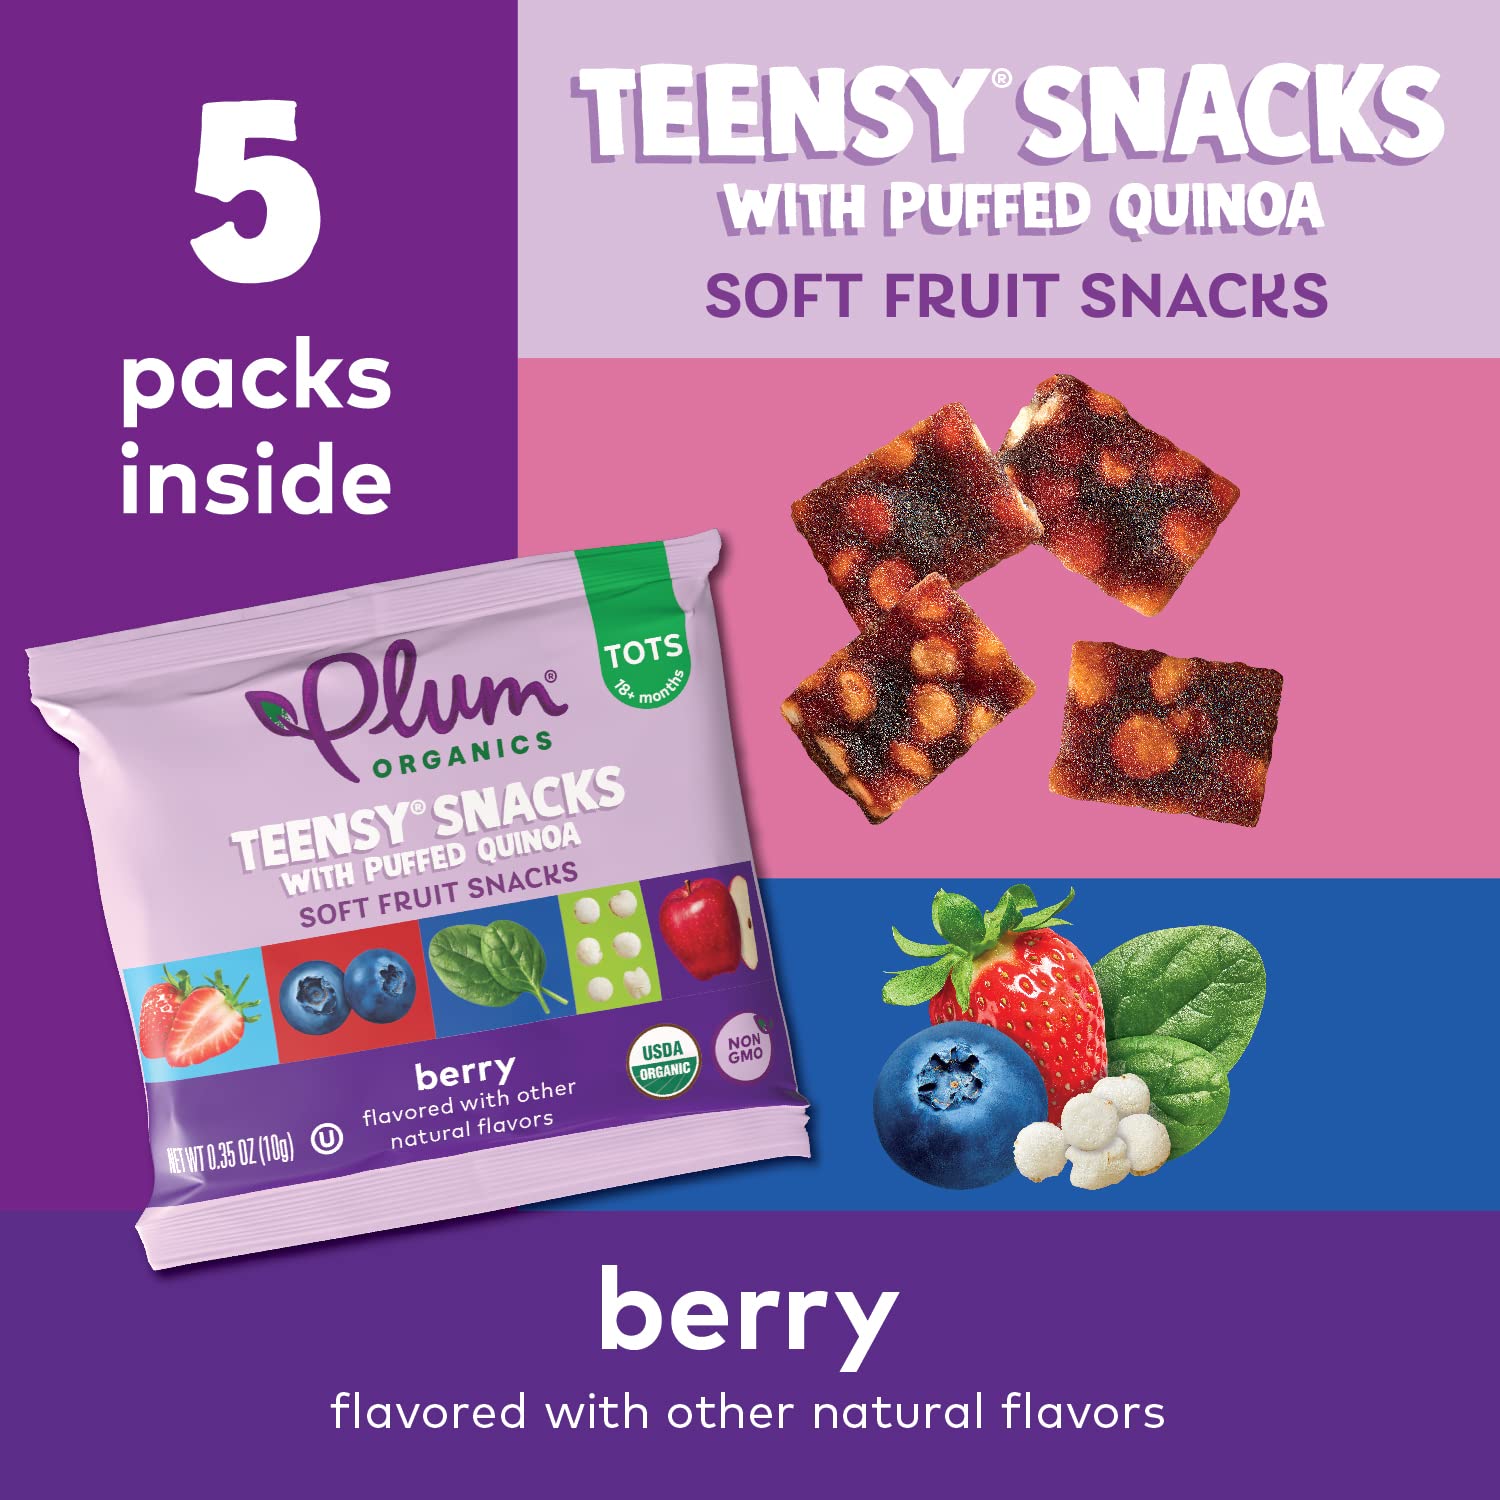 Plum Organics Teensy Snacks Soft Fruit Snacks - Berry with Puffed Quinoa - 0.35 oz Bags (Pack of 5) - Organic Toddler Food Fruit Snacks